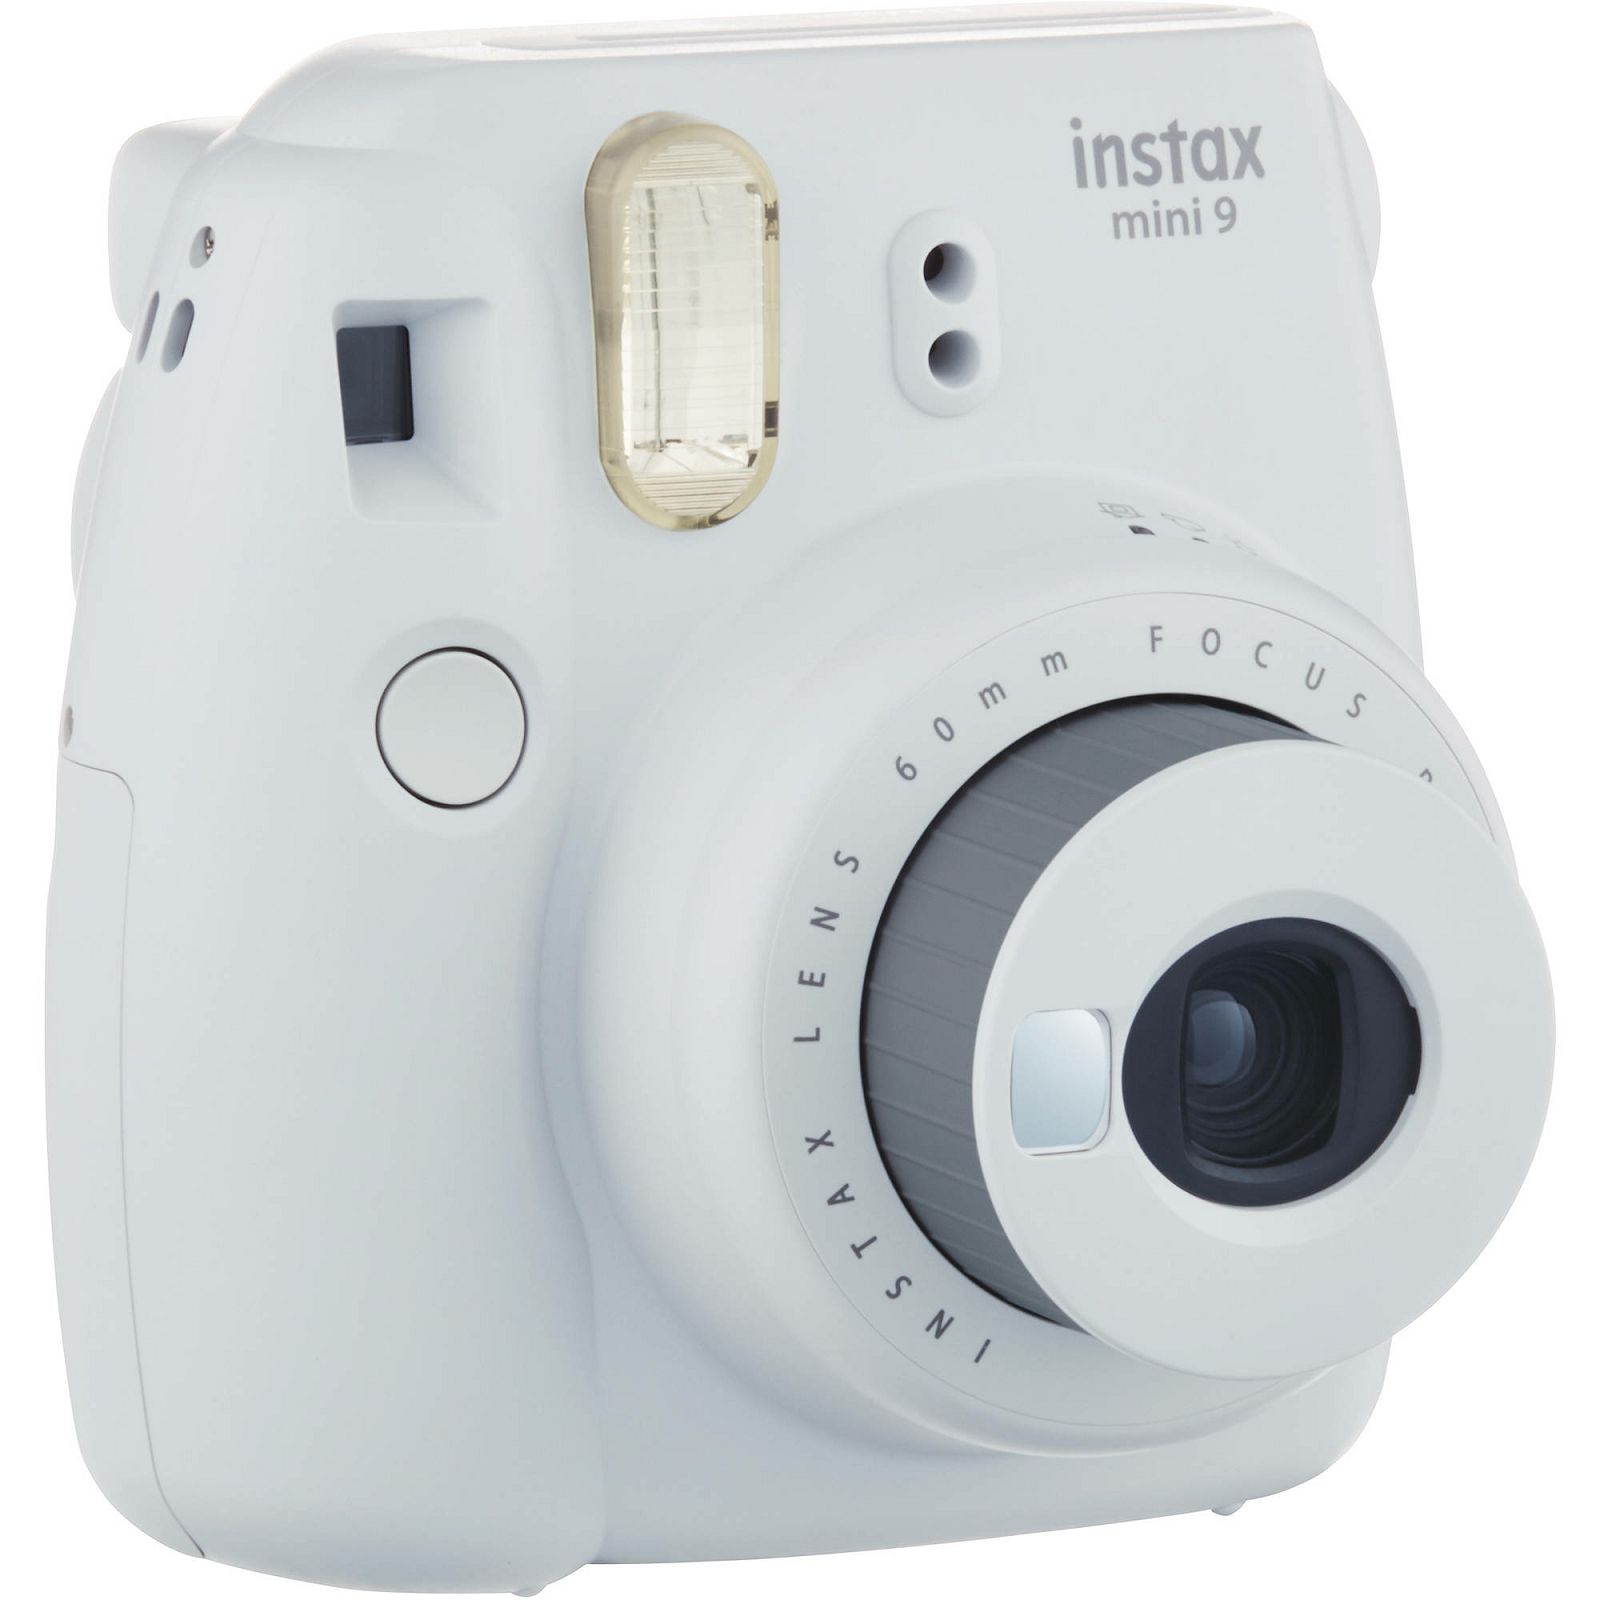 Fujifilm Instax Mini 9 Smoky White bijeli polaroid Fuji fotoaparat s trenutnim ispisom fotografije + Fujinon 60mm f/12.7 objektiv